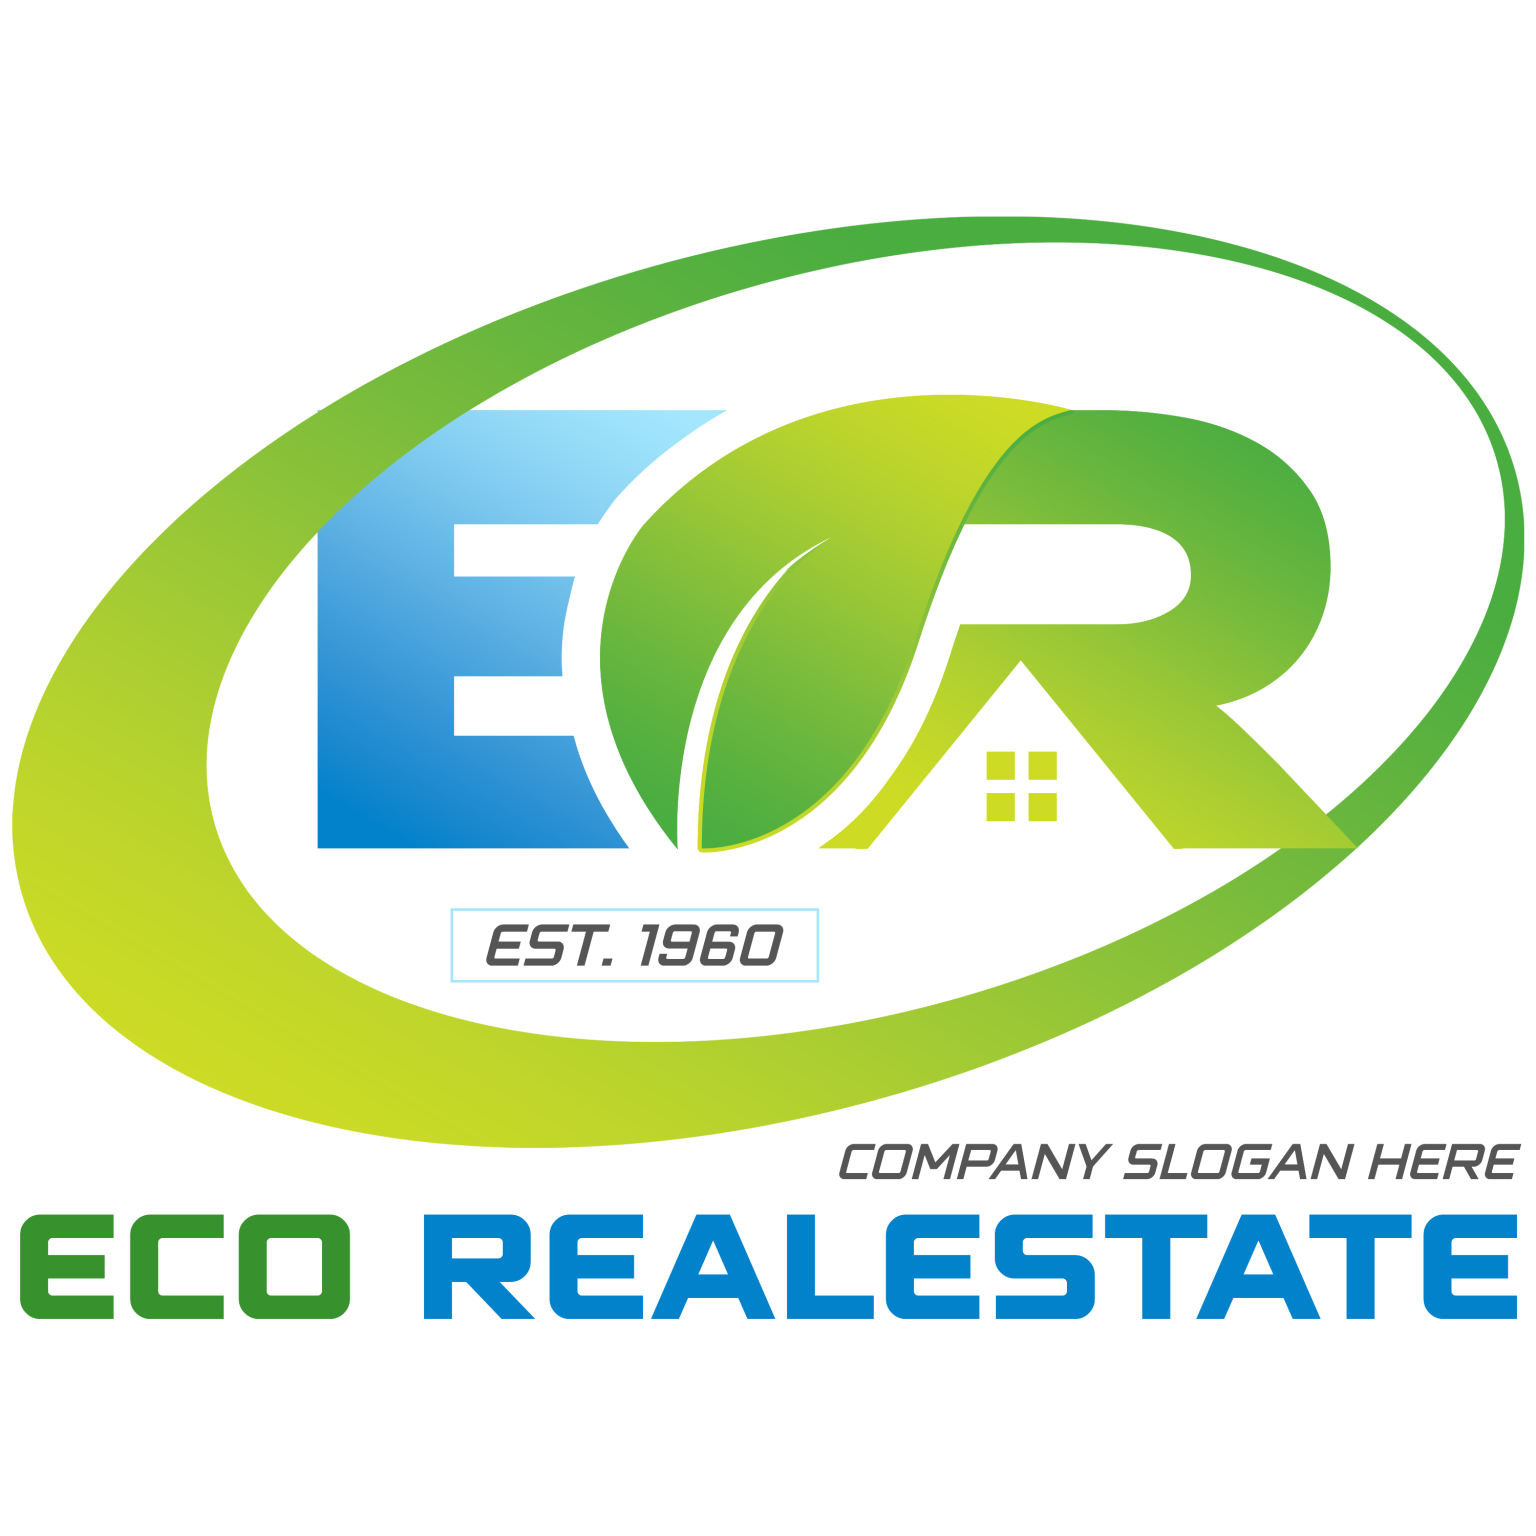 eco realestate logo design png 1536x1536 286